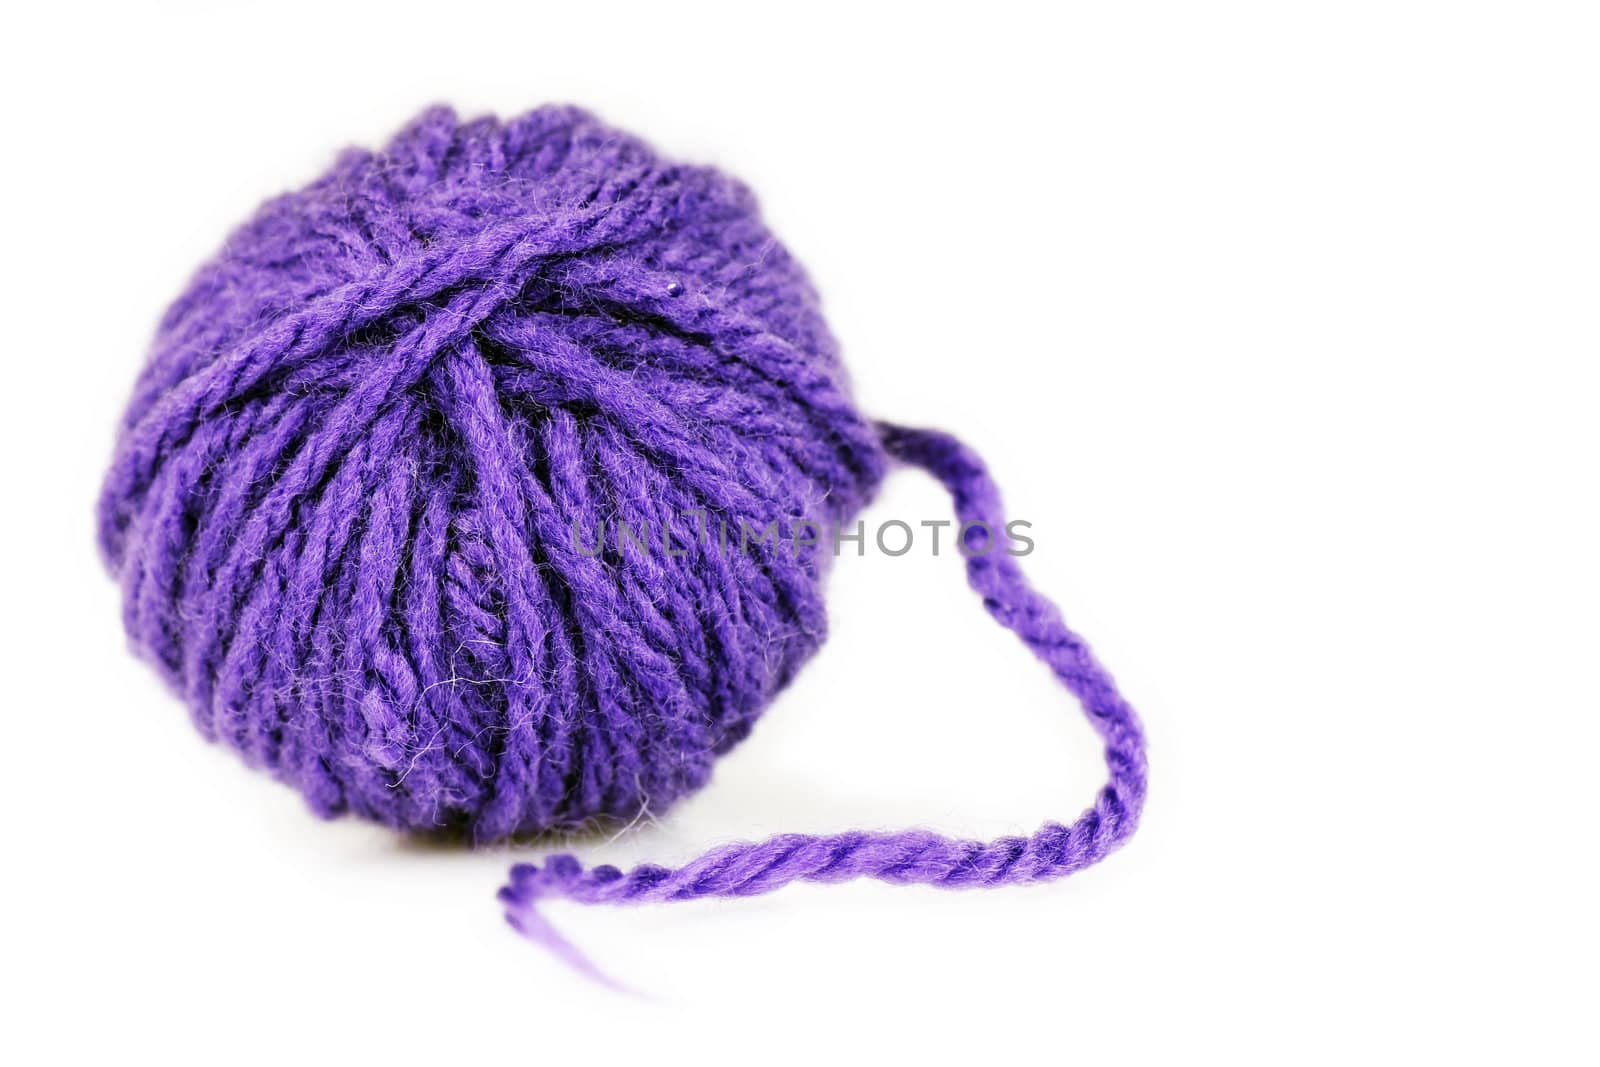 Ball of intense purple wool or yarn by Mirage3